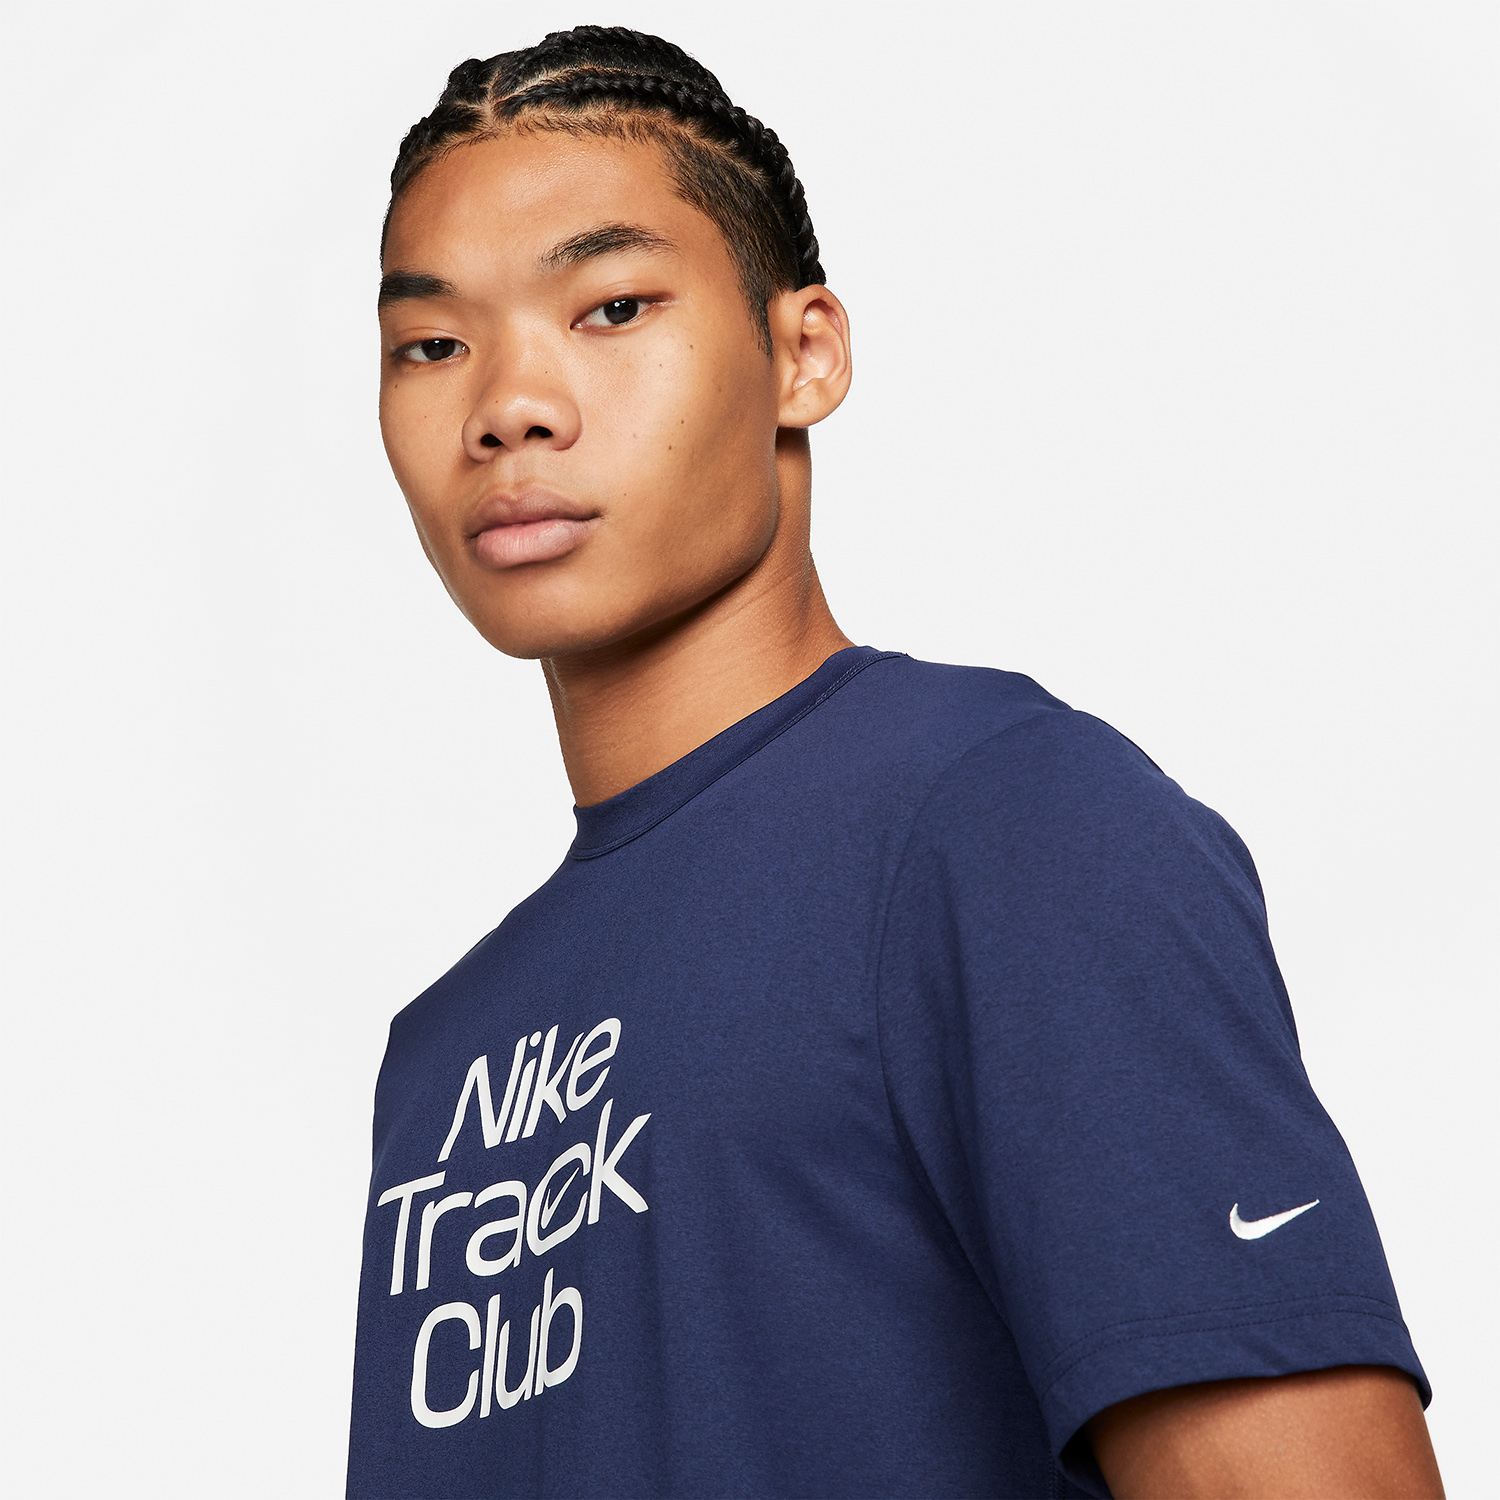 Nike Club t-shirt in blue